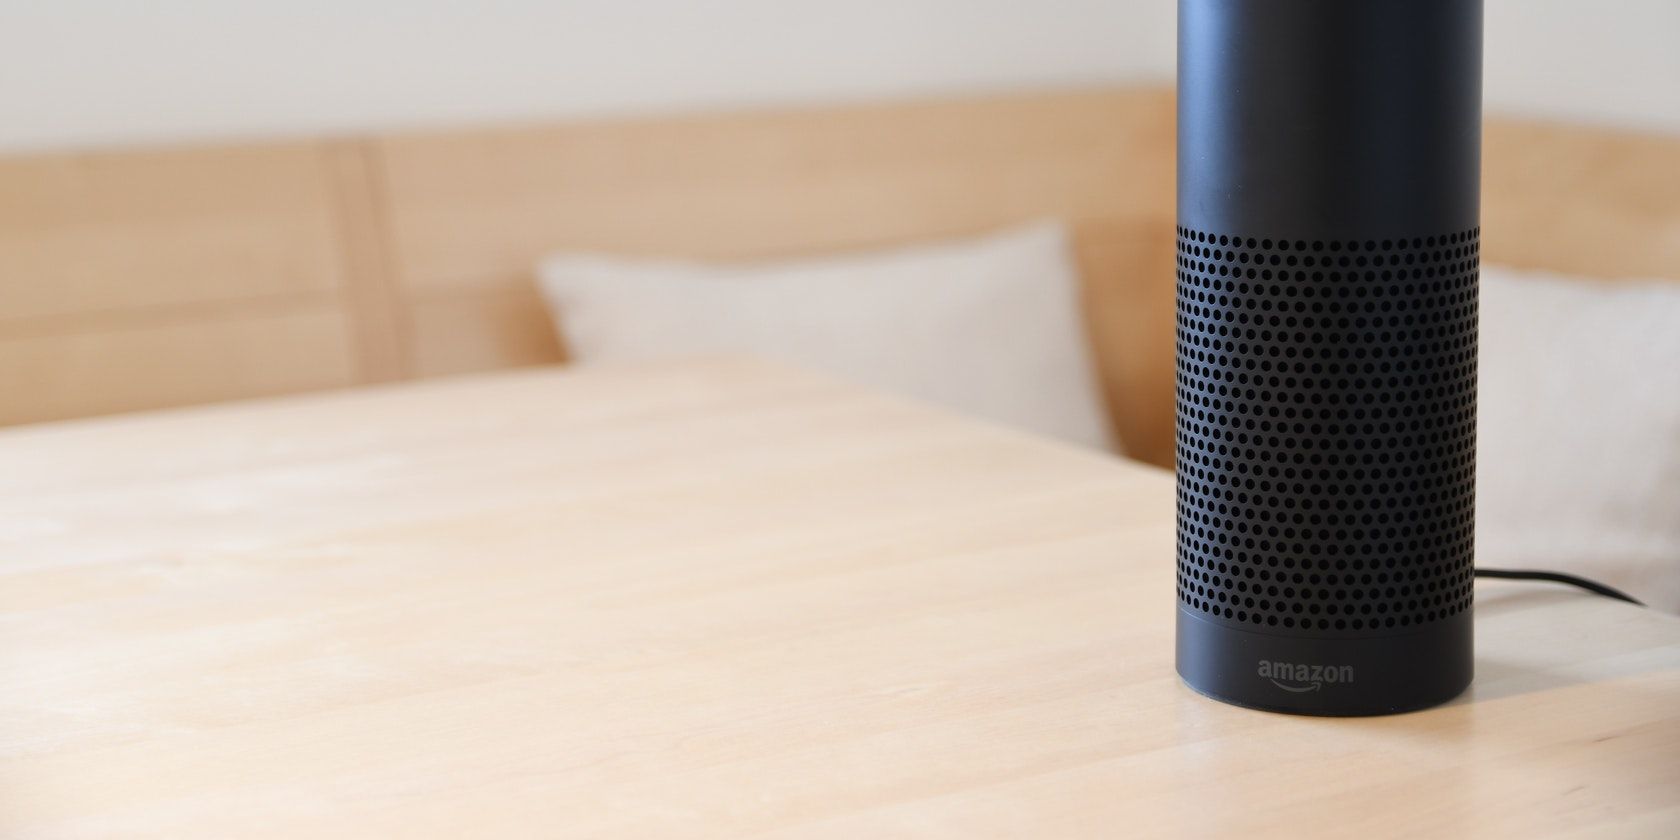 An Amazon Echo